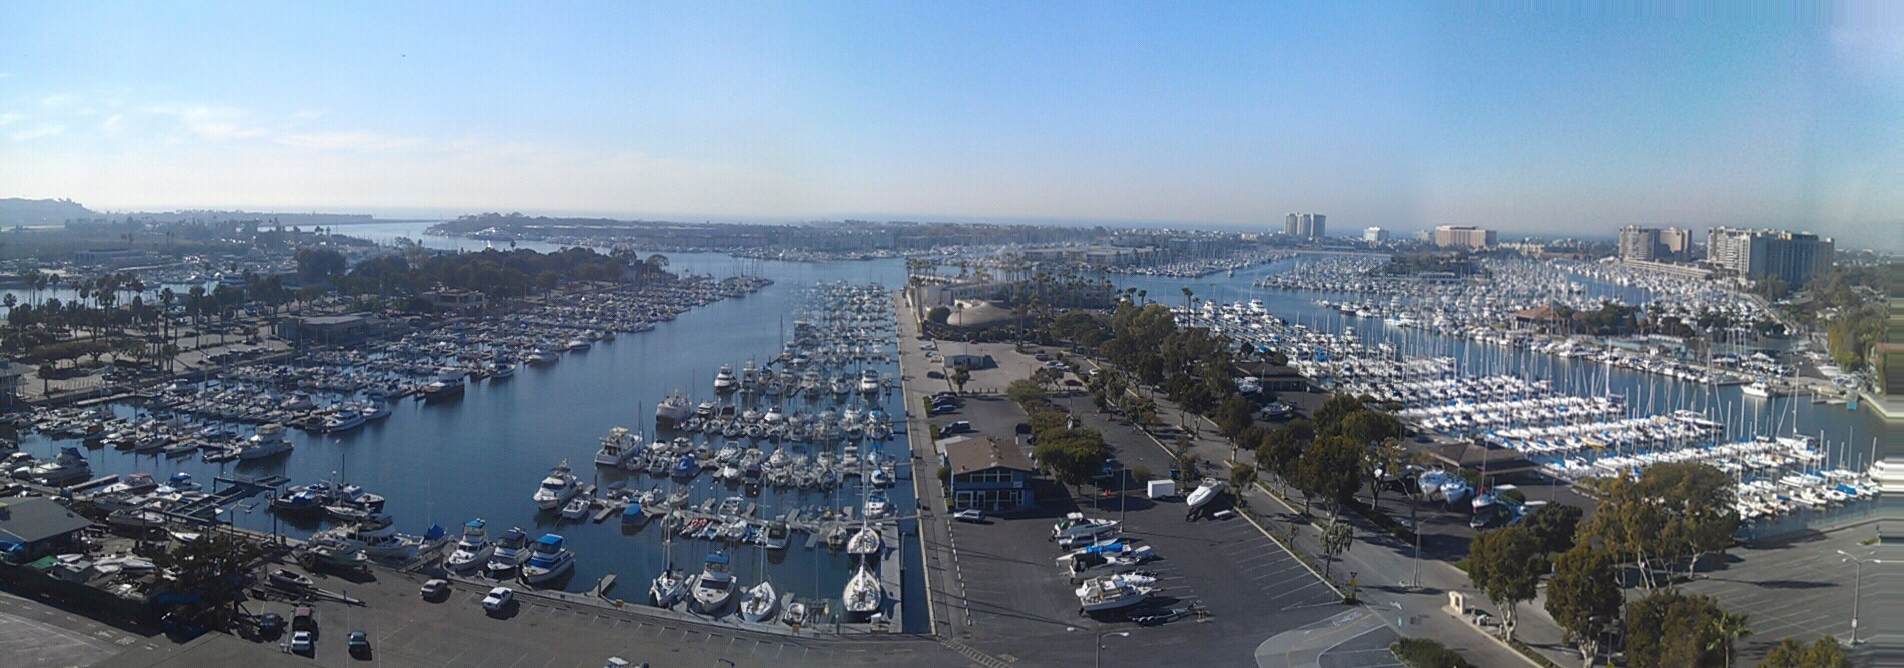 Marina del Rey Real Estate and boat harbor